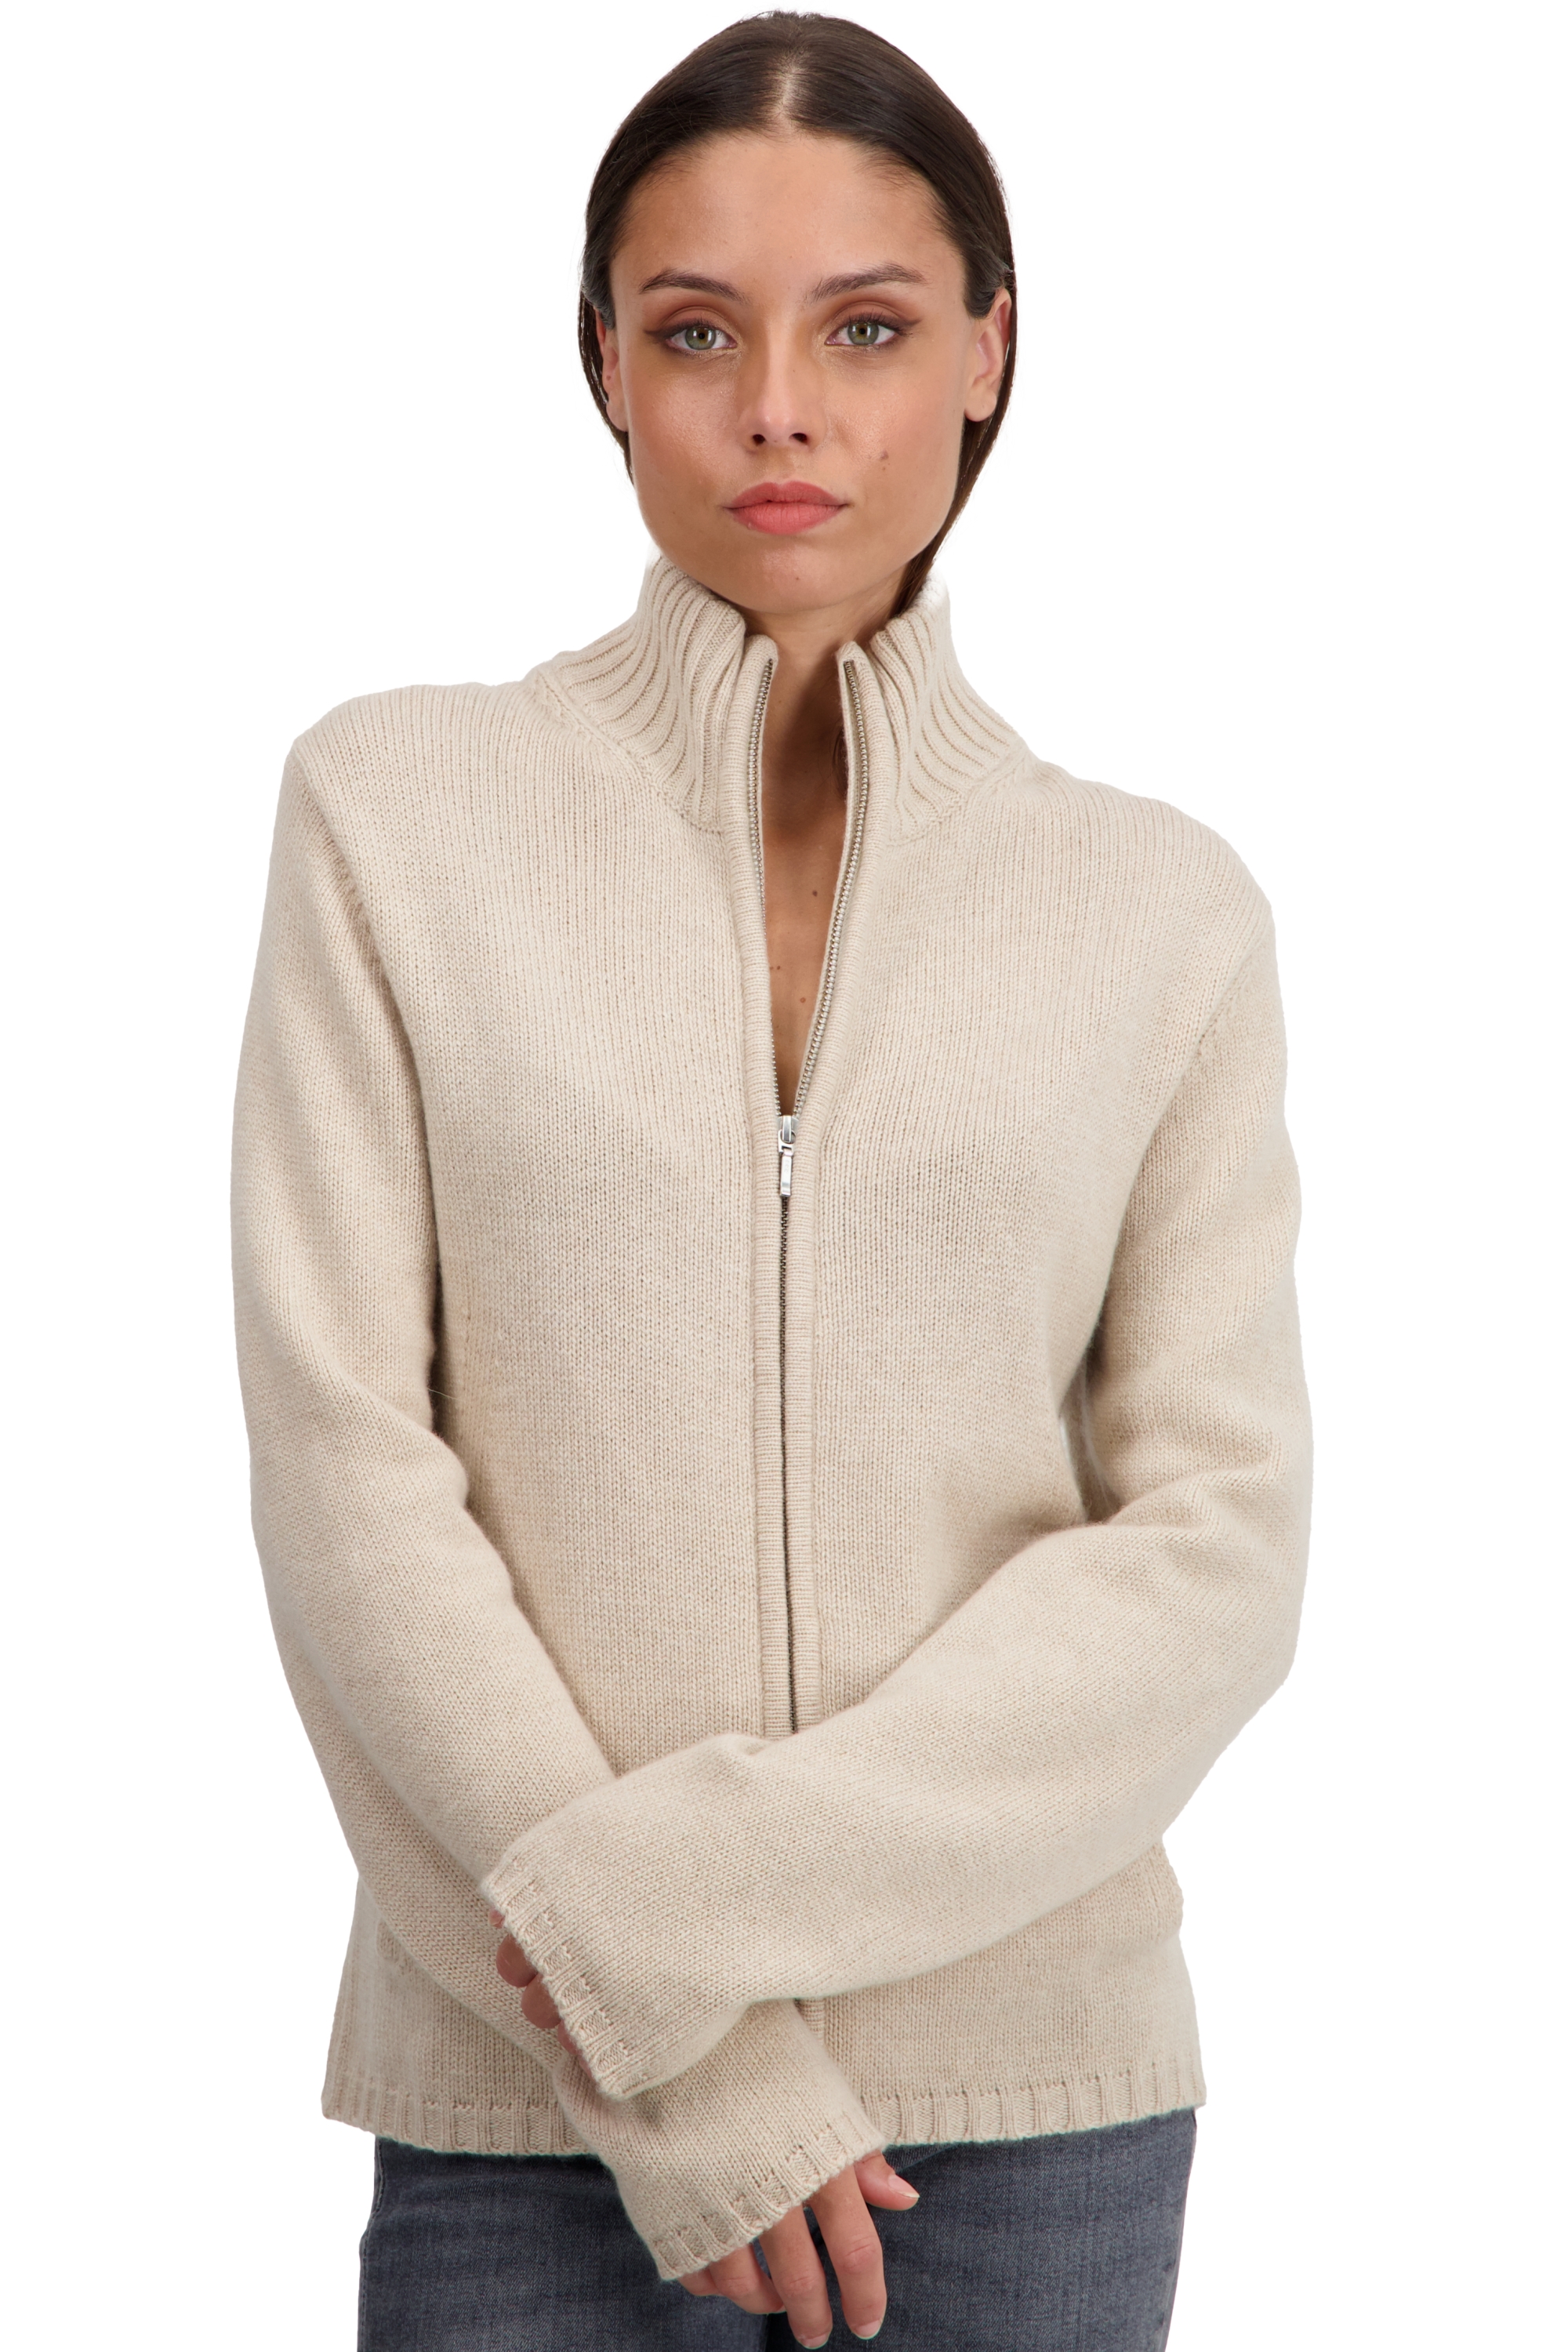 Cachemire pull femme zip capuche elodie natural beige xs